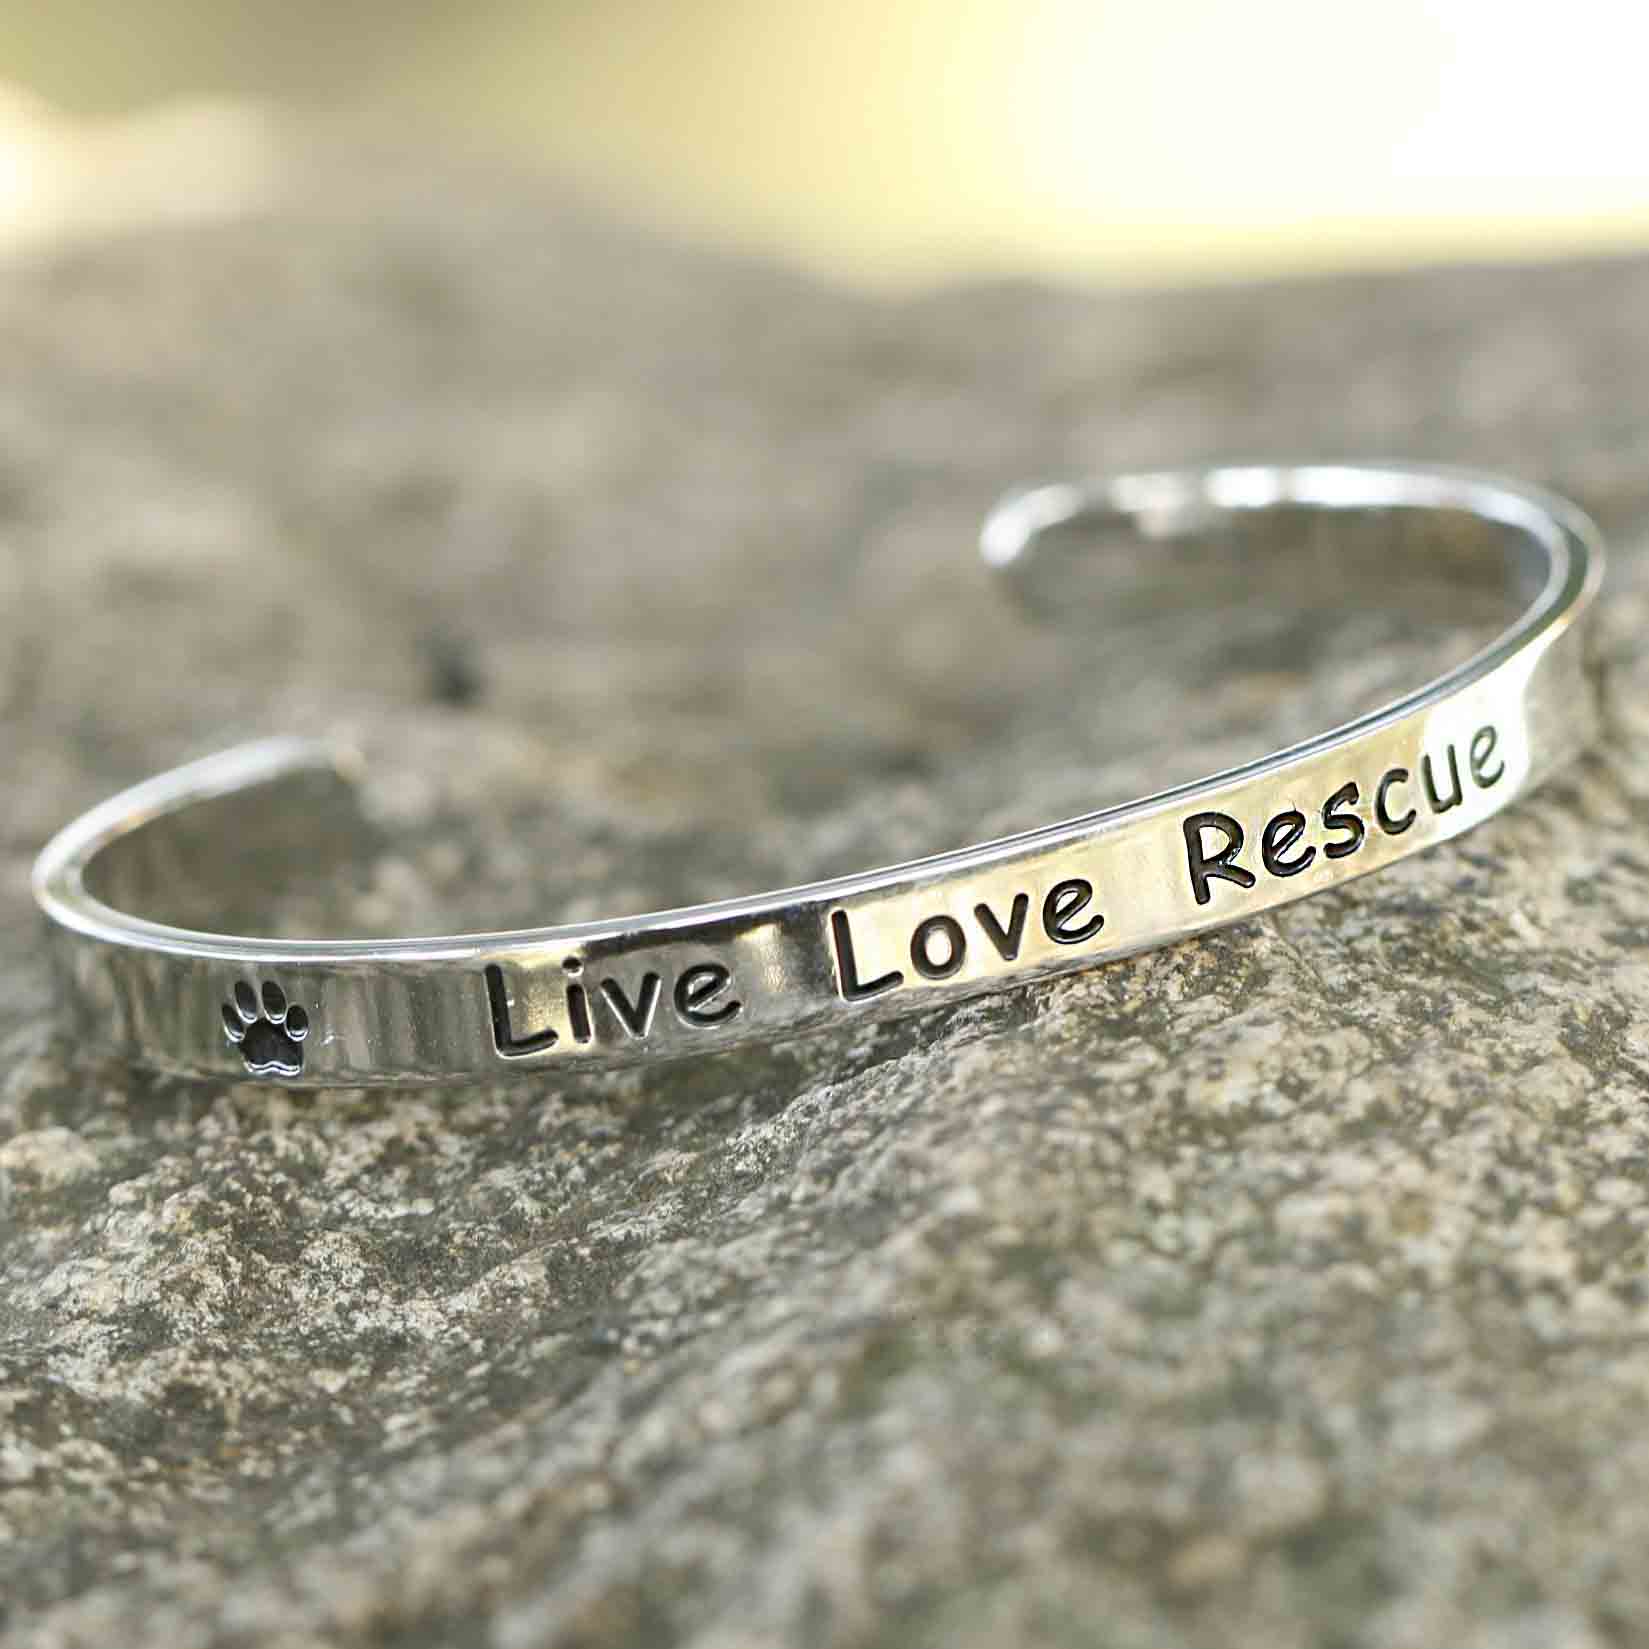 Greyhound Armband Galgo Grey Hound Dog Animal Charm Hond Armband Voor Mannen Vrouwen: Live Love Rescue